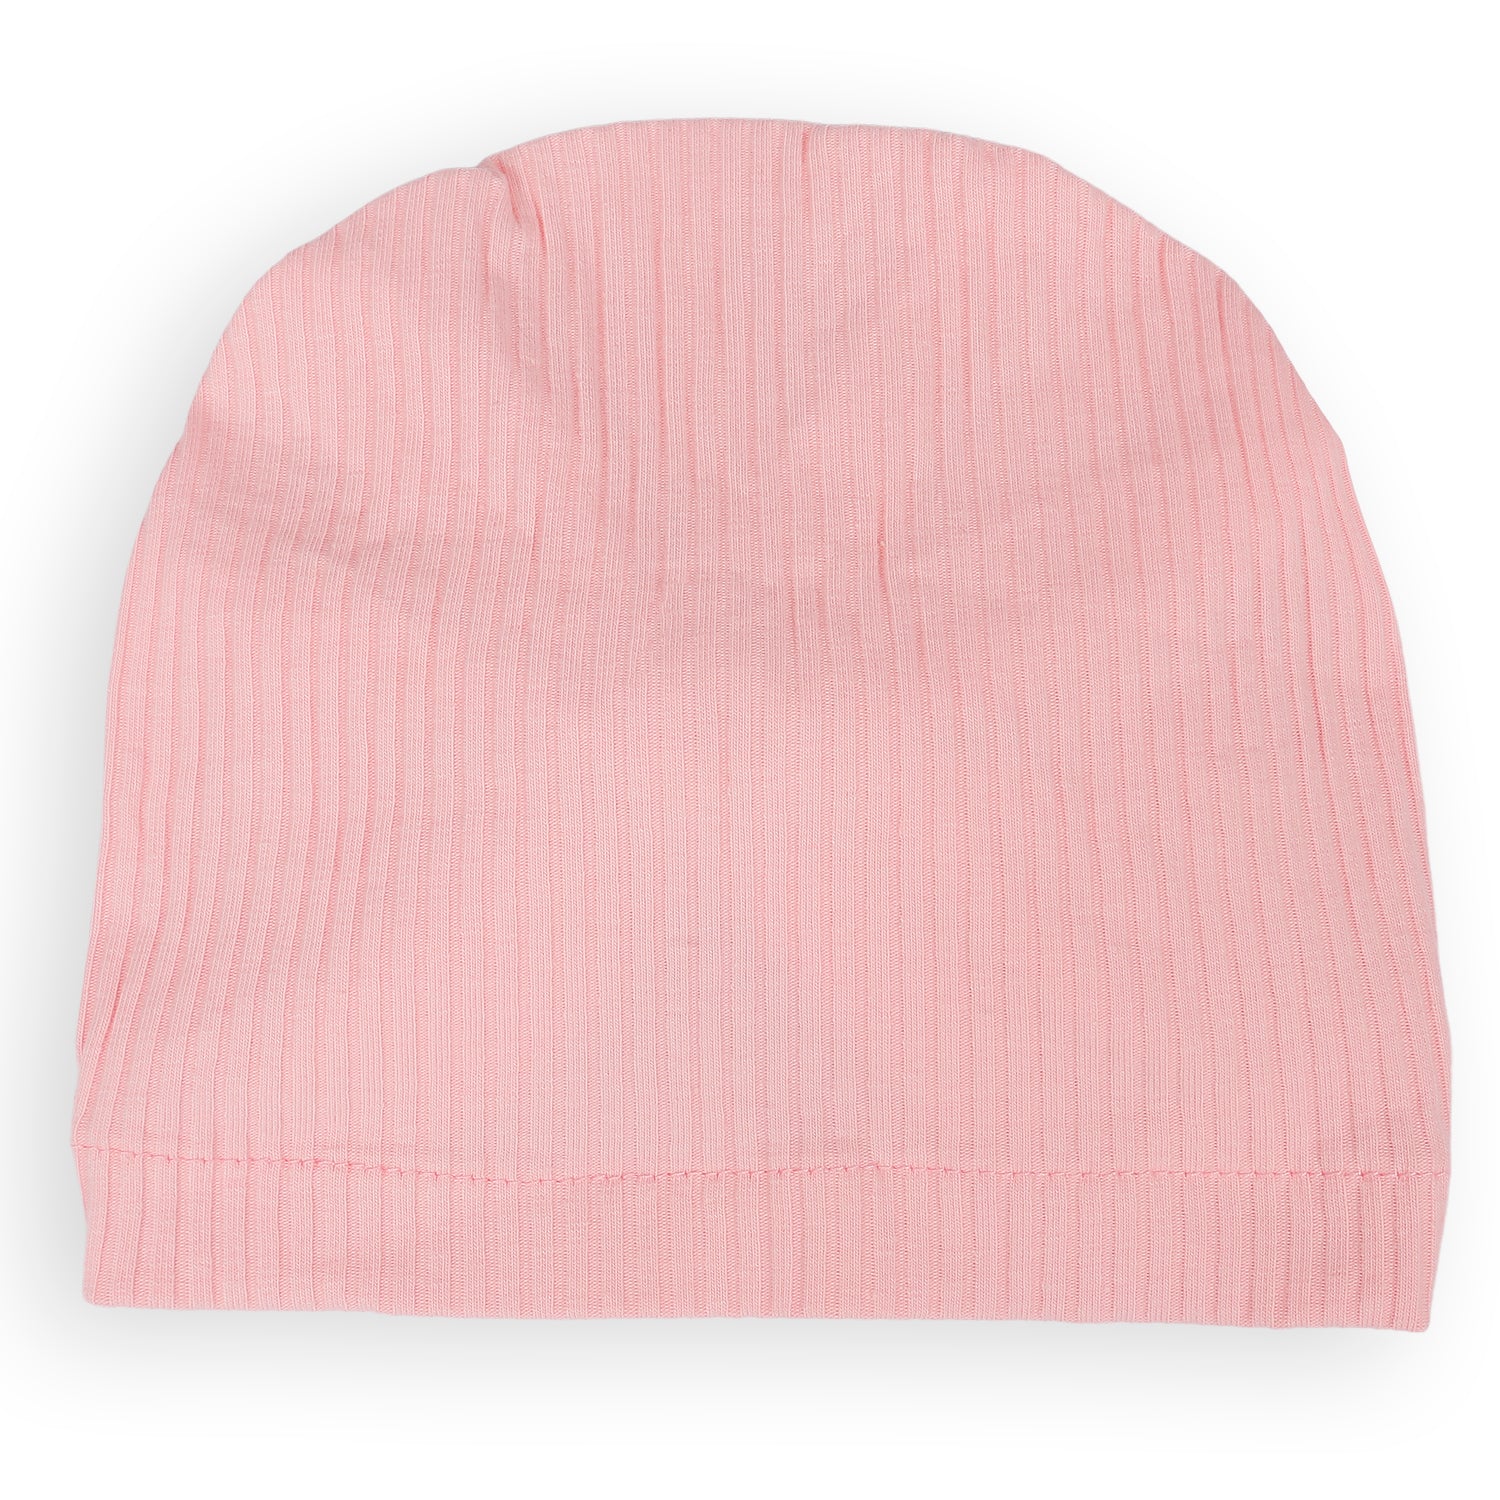 Bow Turban Cap - Salmon Pink